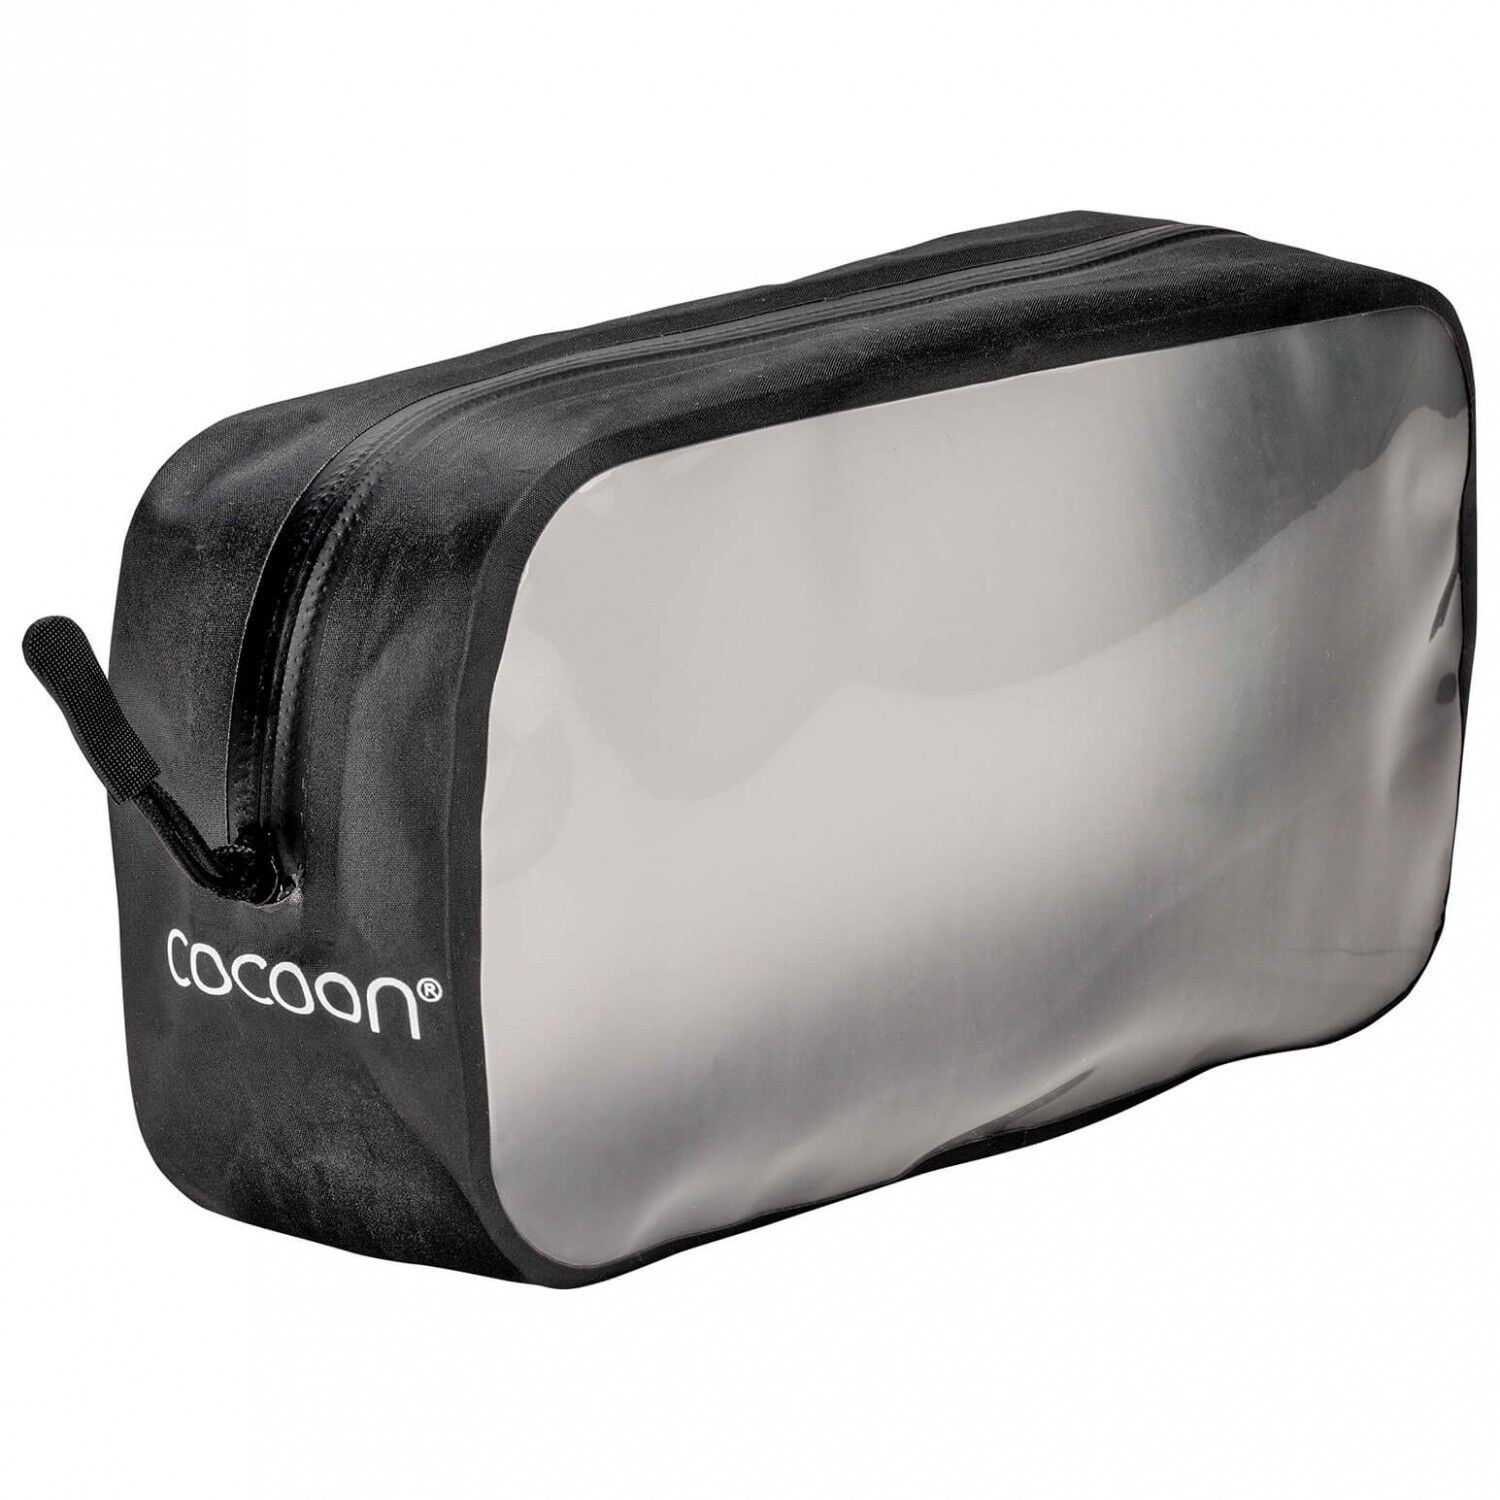 Cocoon Carry On Liquids Bags - Travel handbag